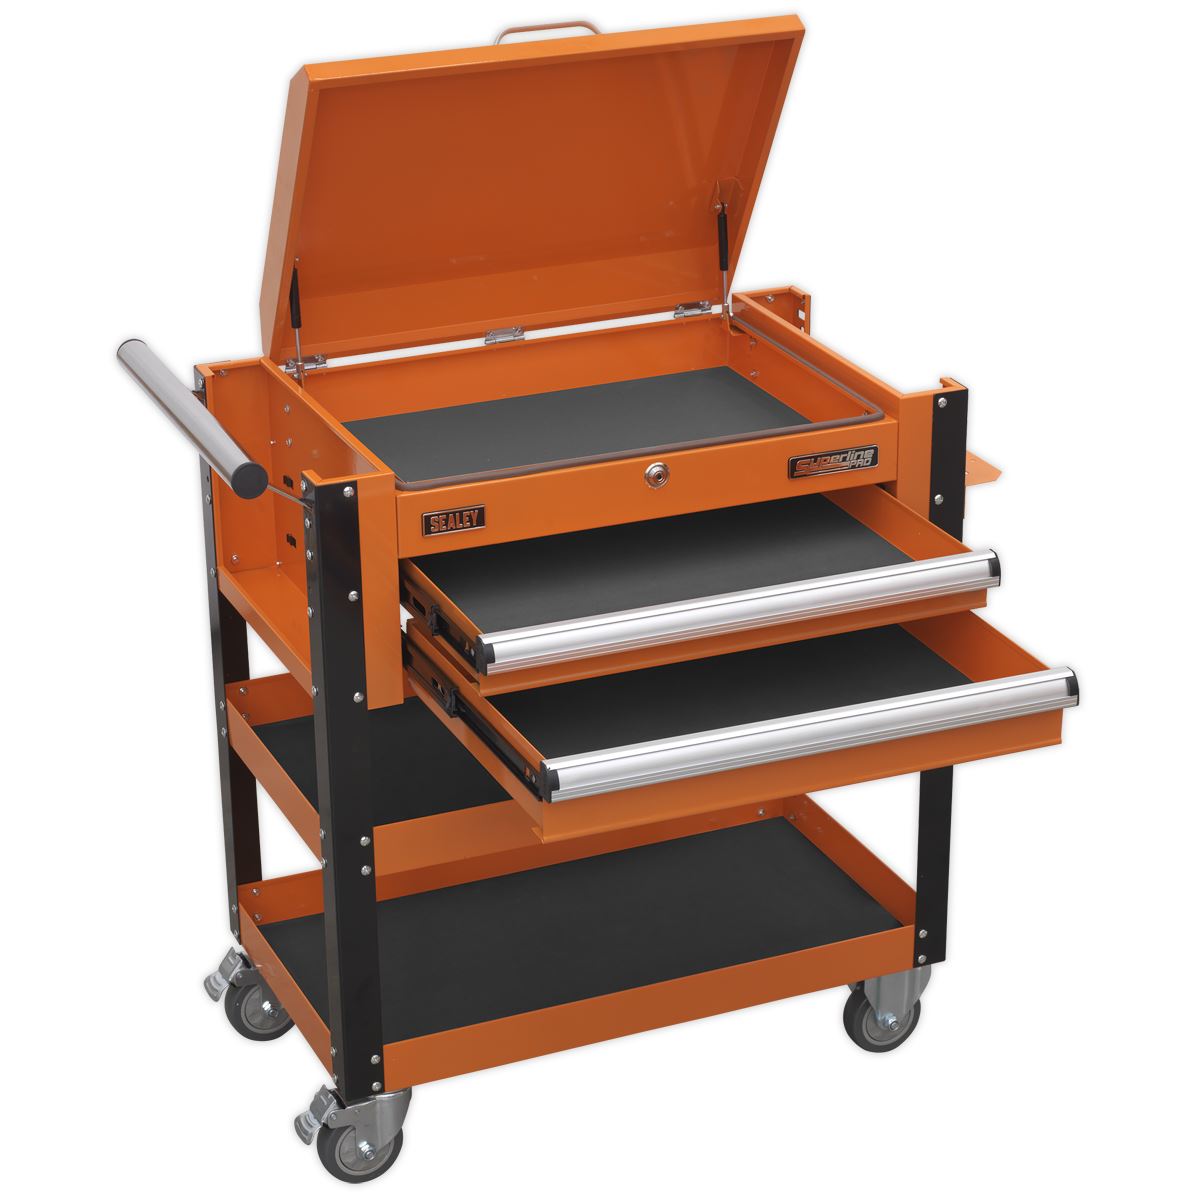 Sealey Superline Pro Heavy-Duty Mobile Tool & Parts Trolley 2 Drawers & Lockable Top - Orange